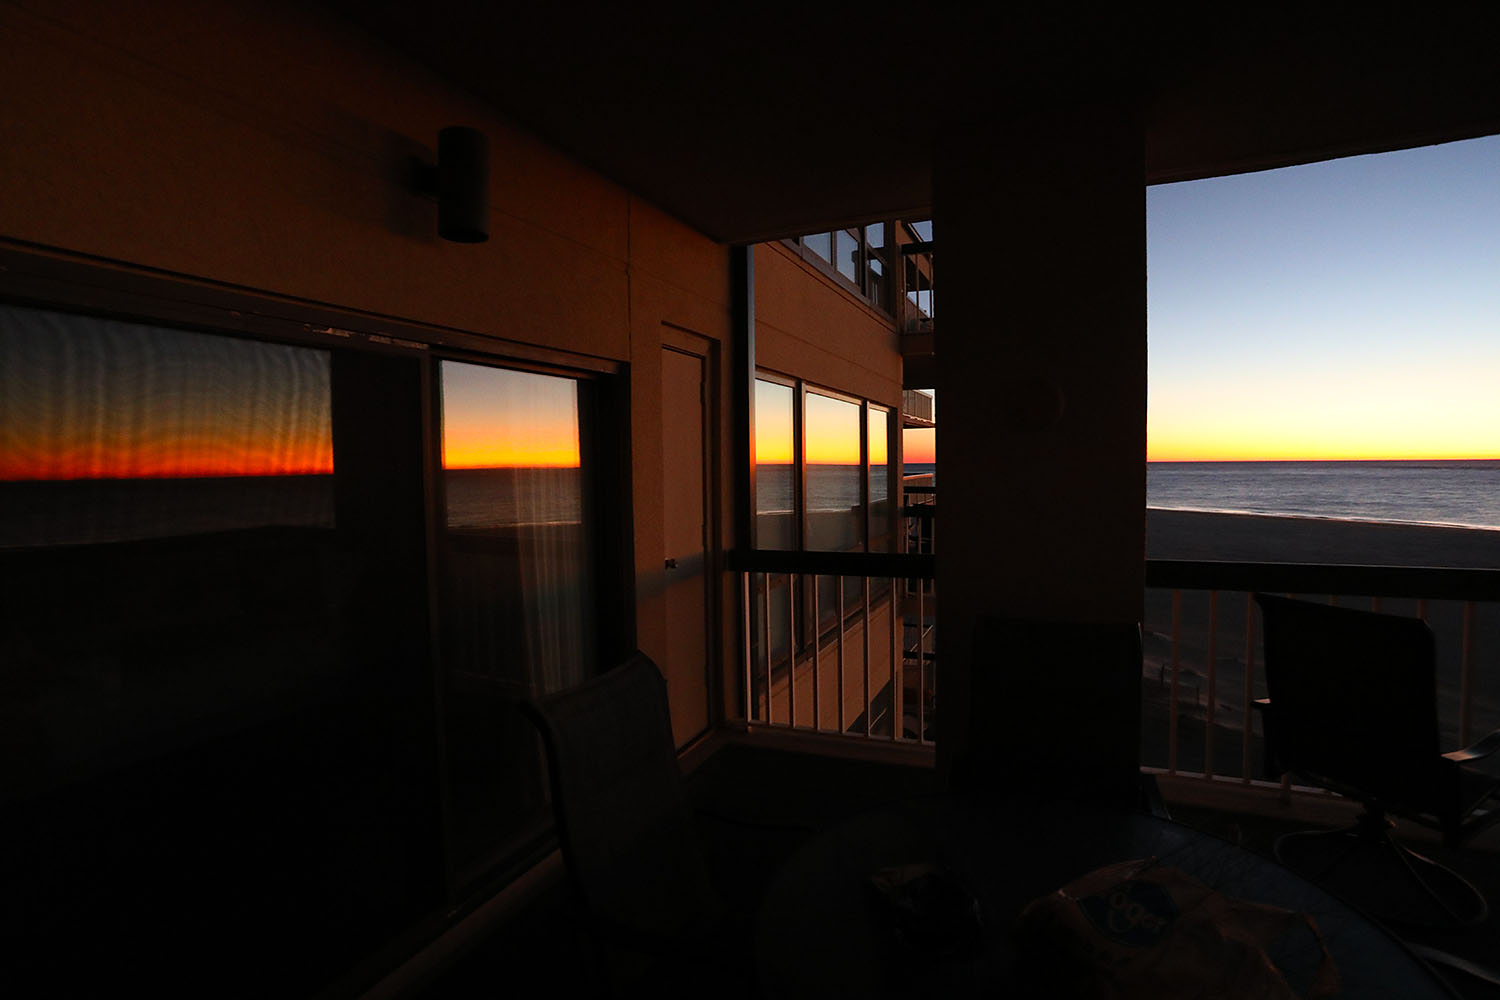 0T5A4709 Condo sunrise reflections.jpg